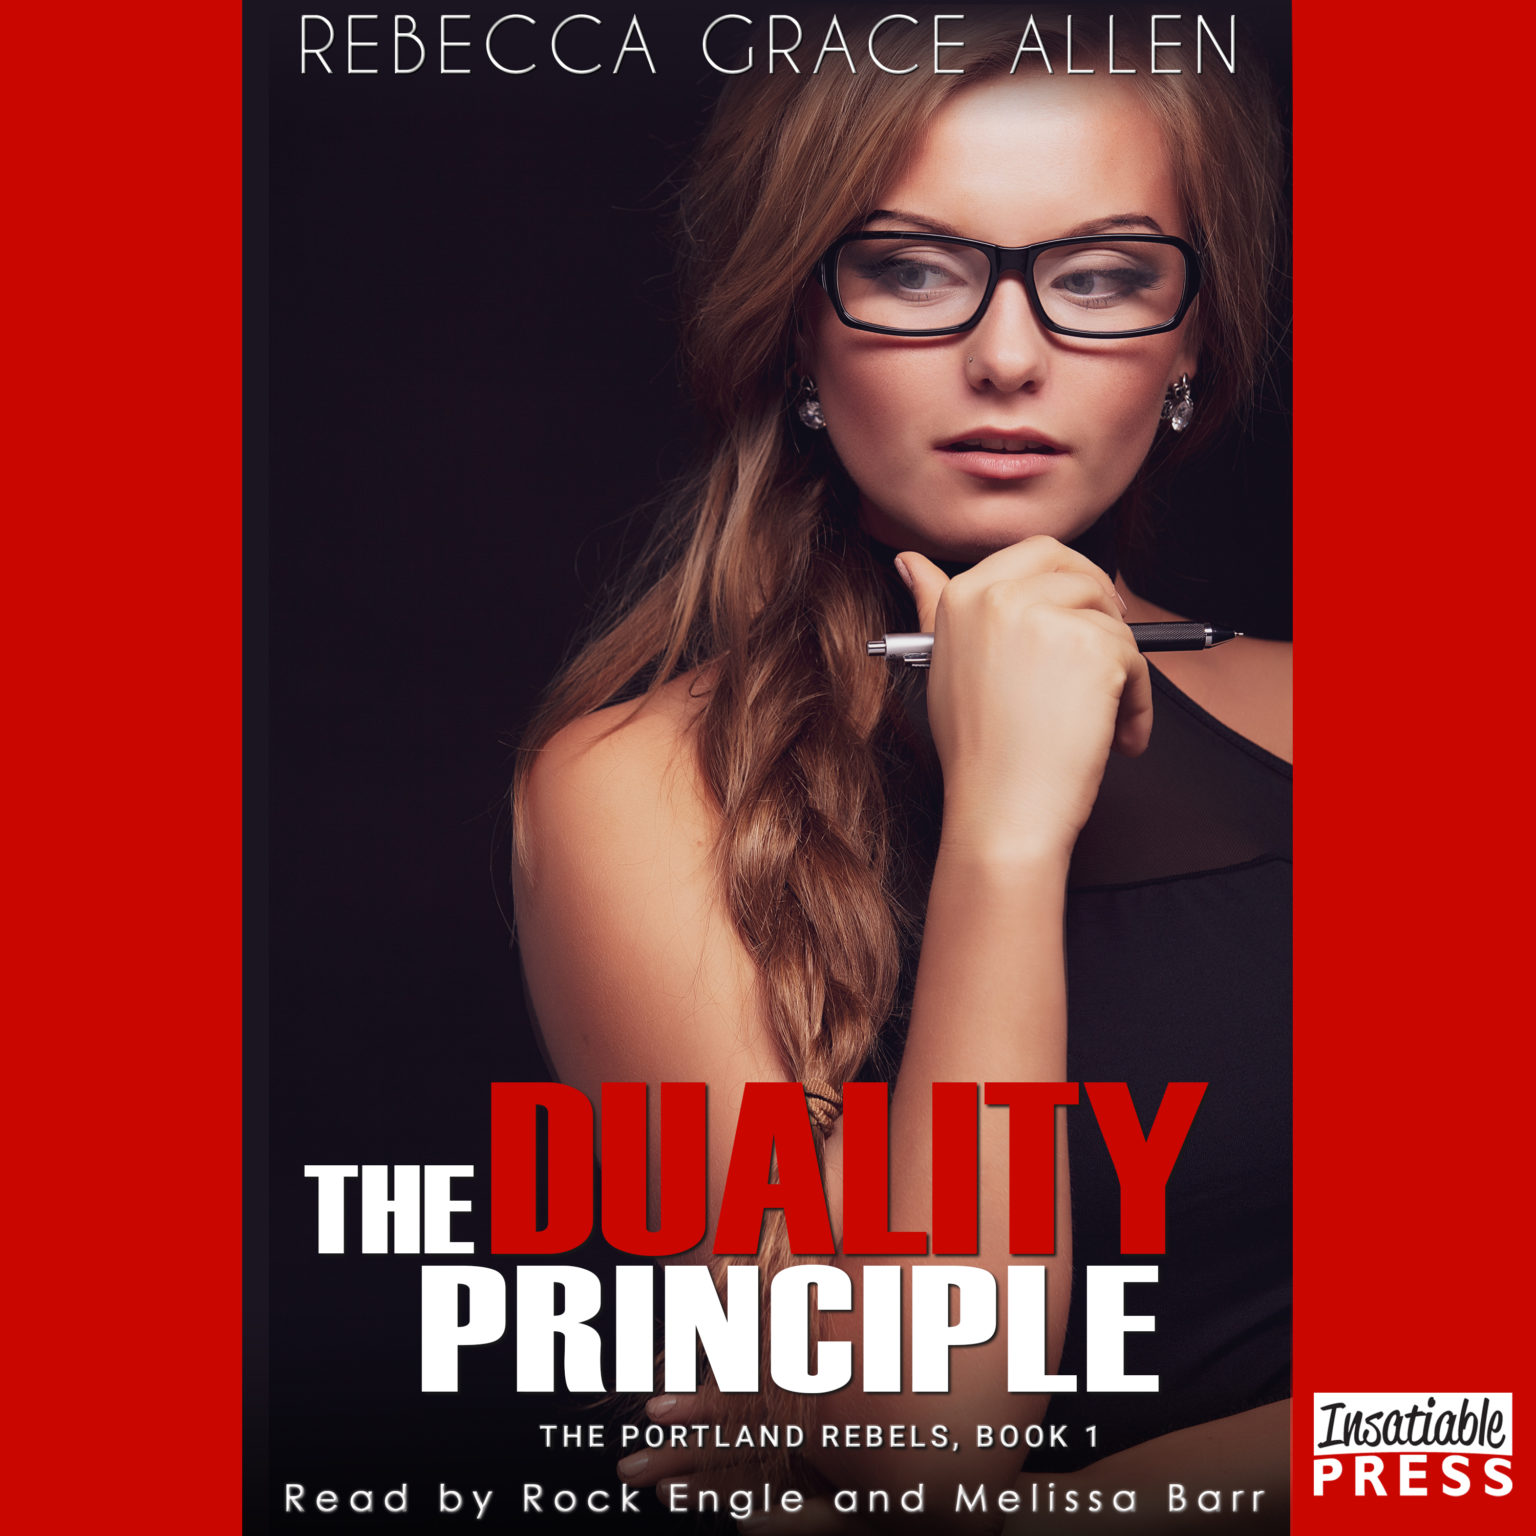 The Duality Principle by Rebecca Grace Allen